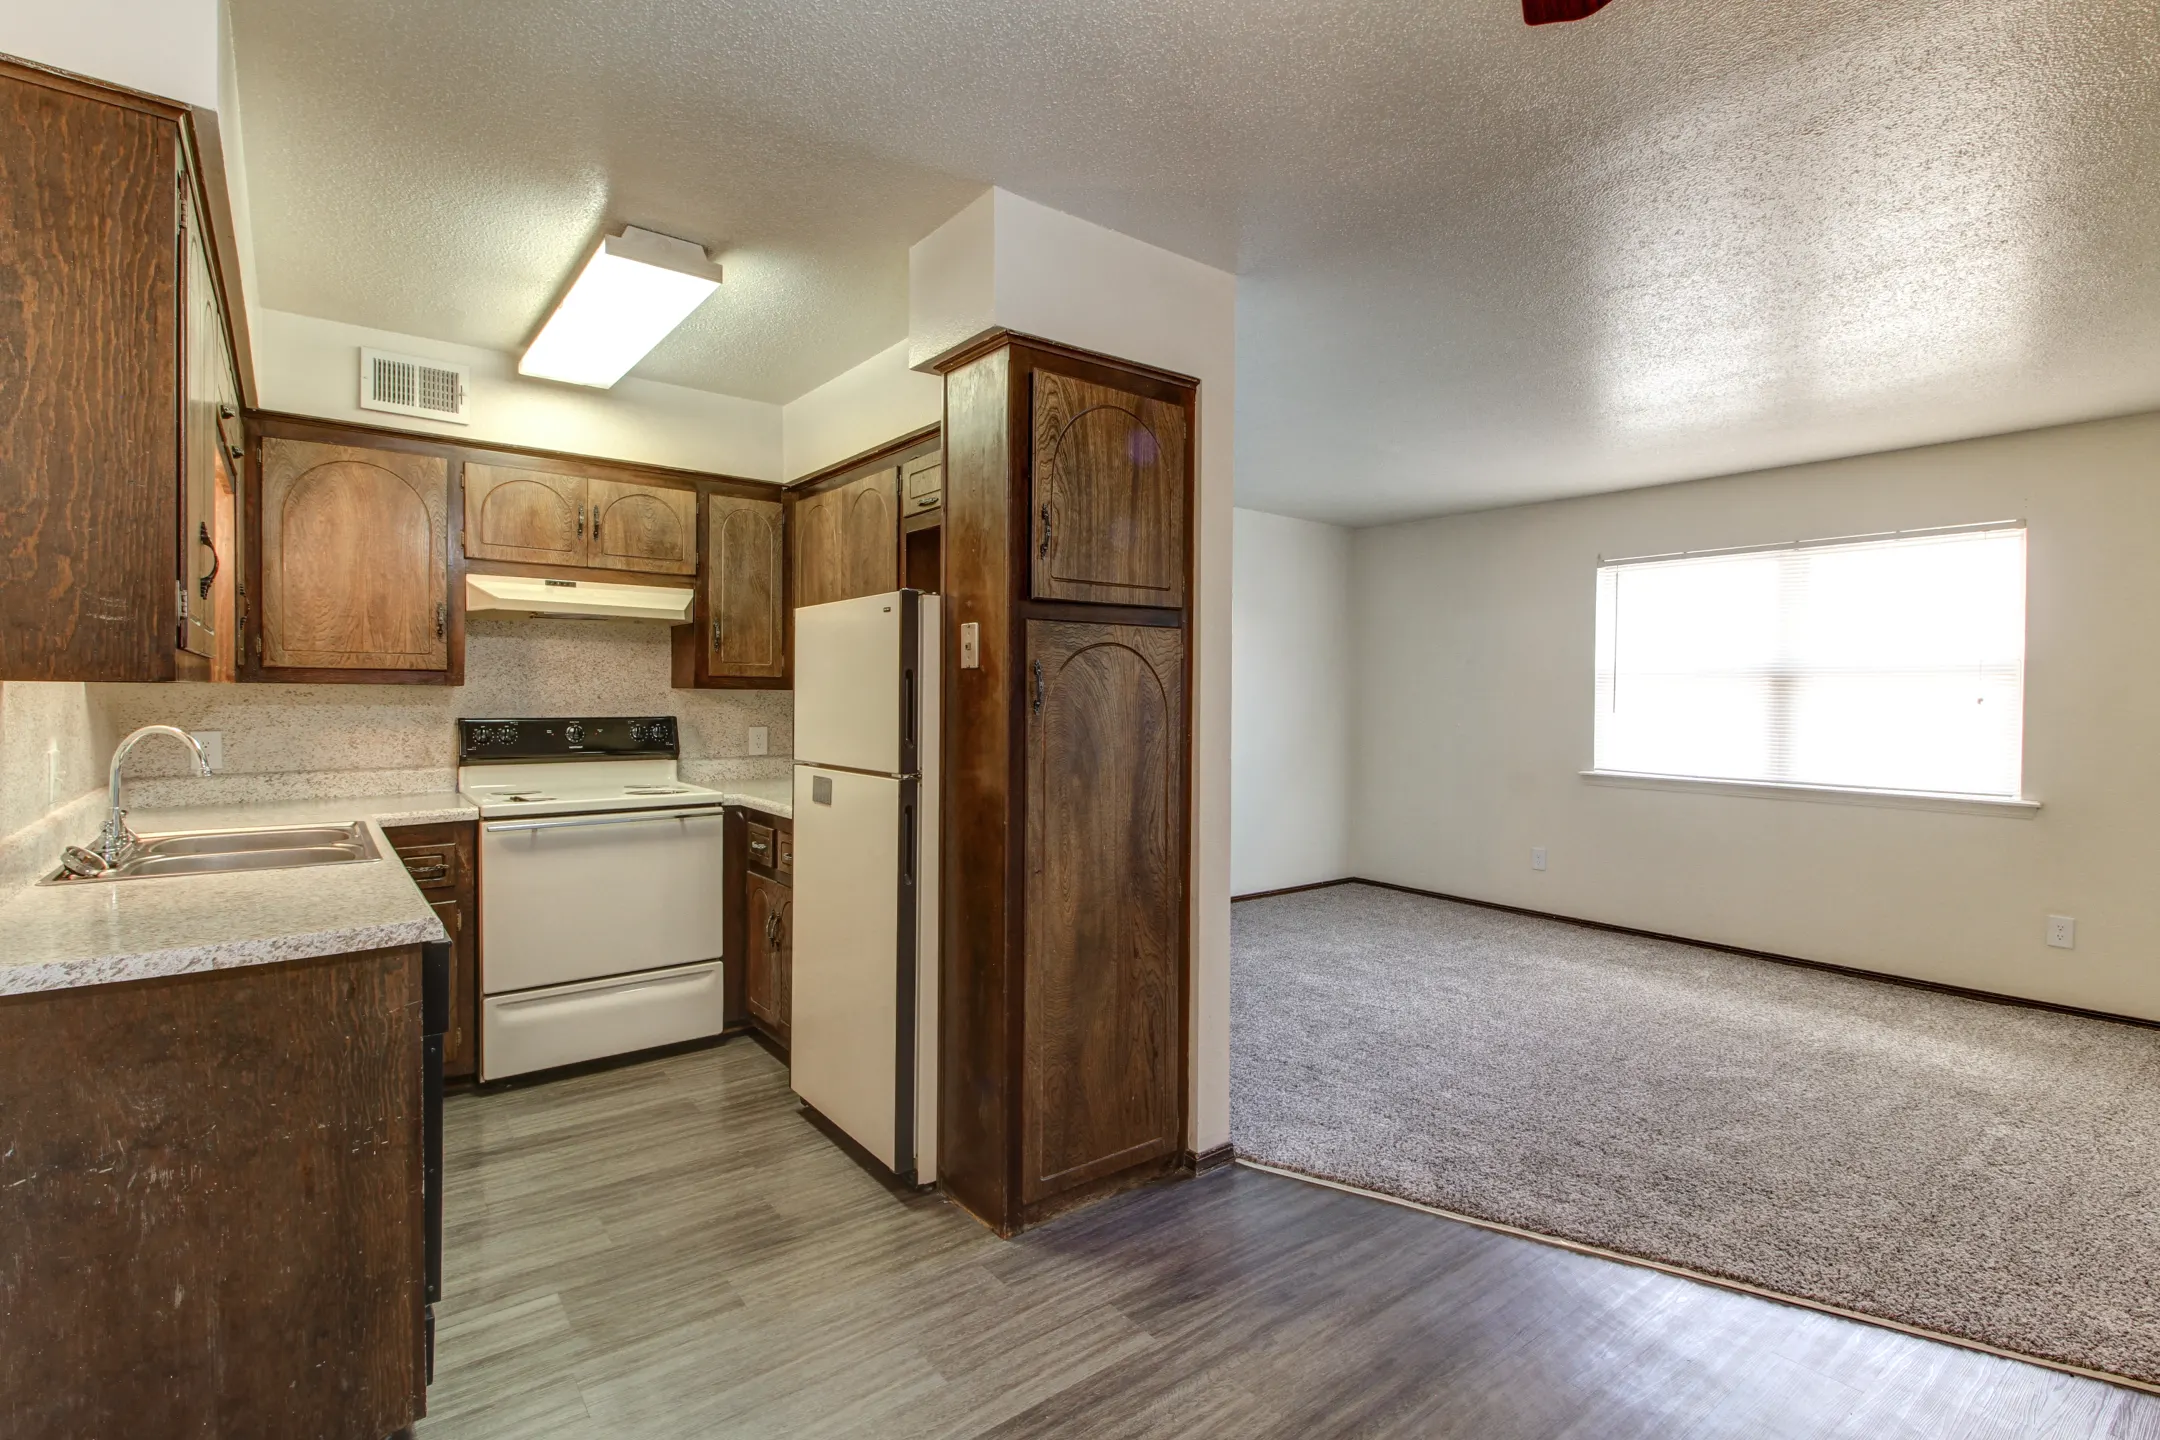 Kitchen - Casady Apartments - Oklahoma City, OK